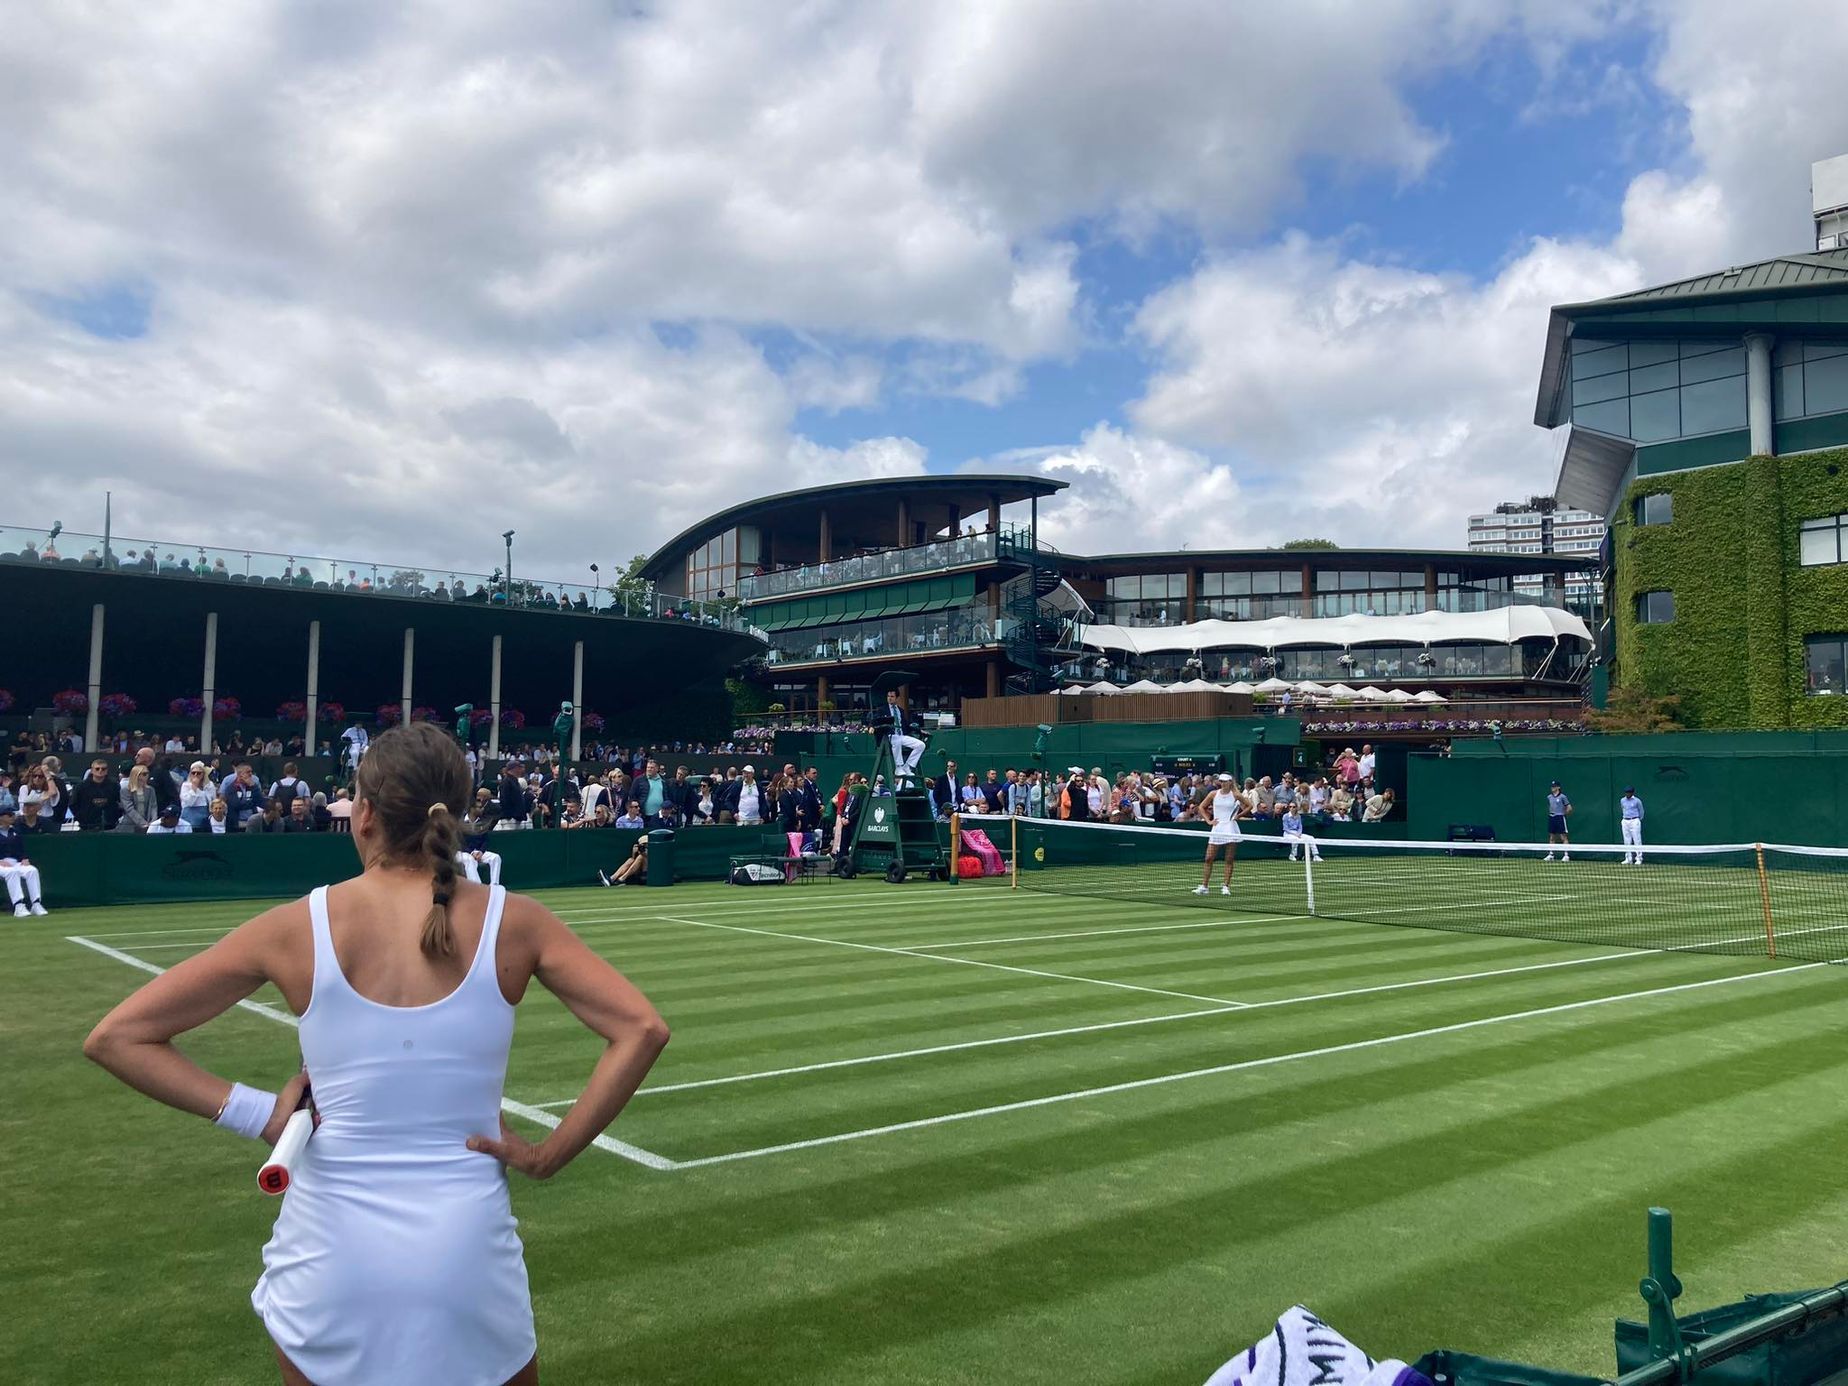 tenis, Barbora Strýcová, Wimbledon 2023